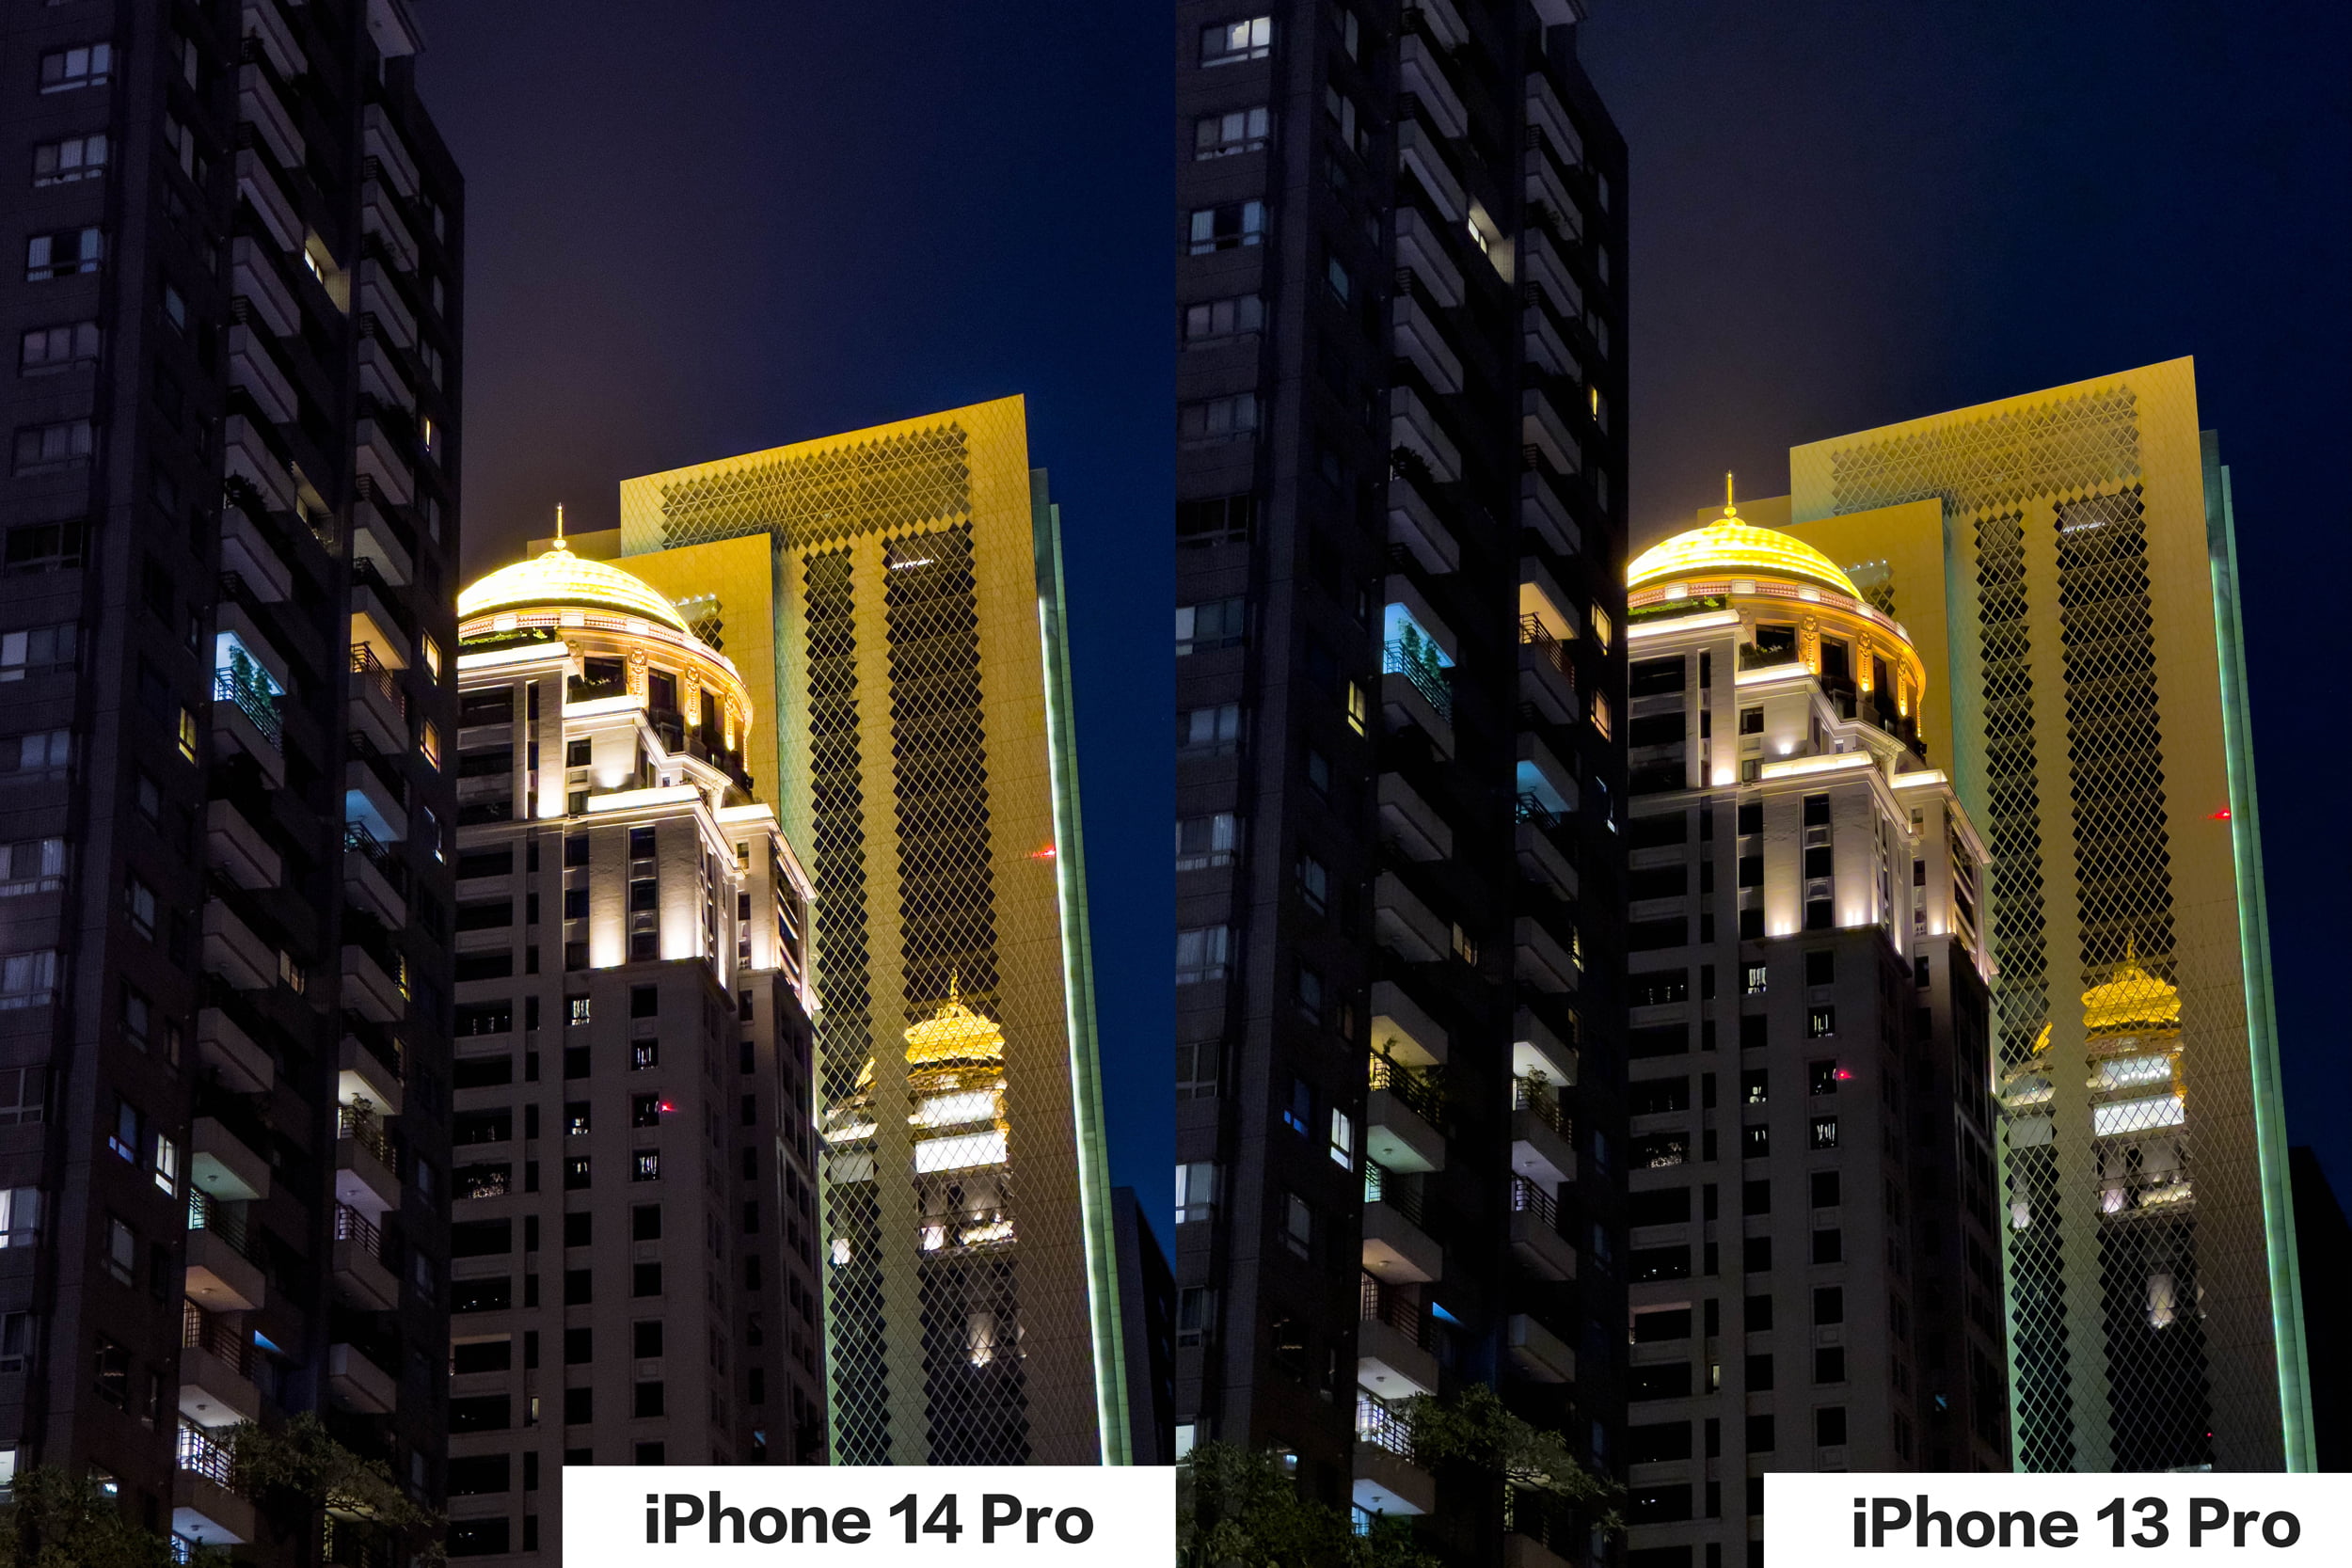 iphone 14 pro night shot comparison 18